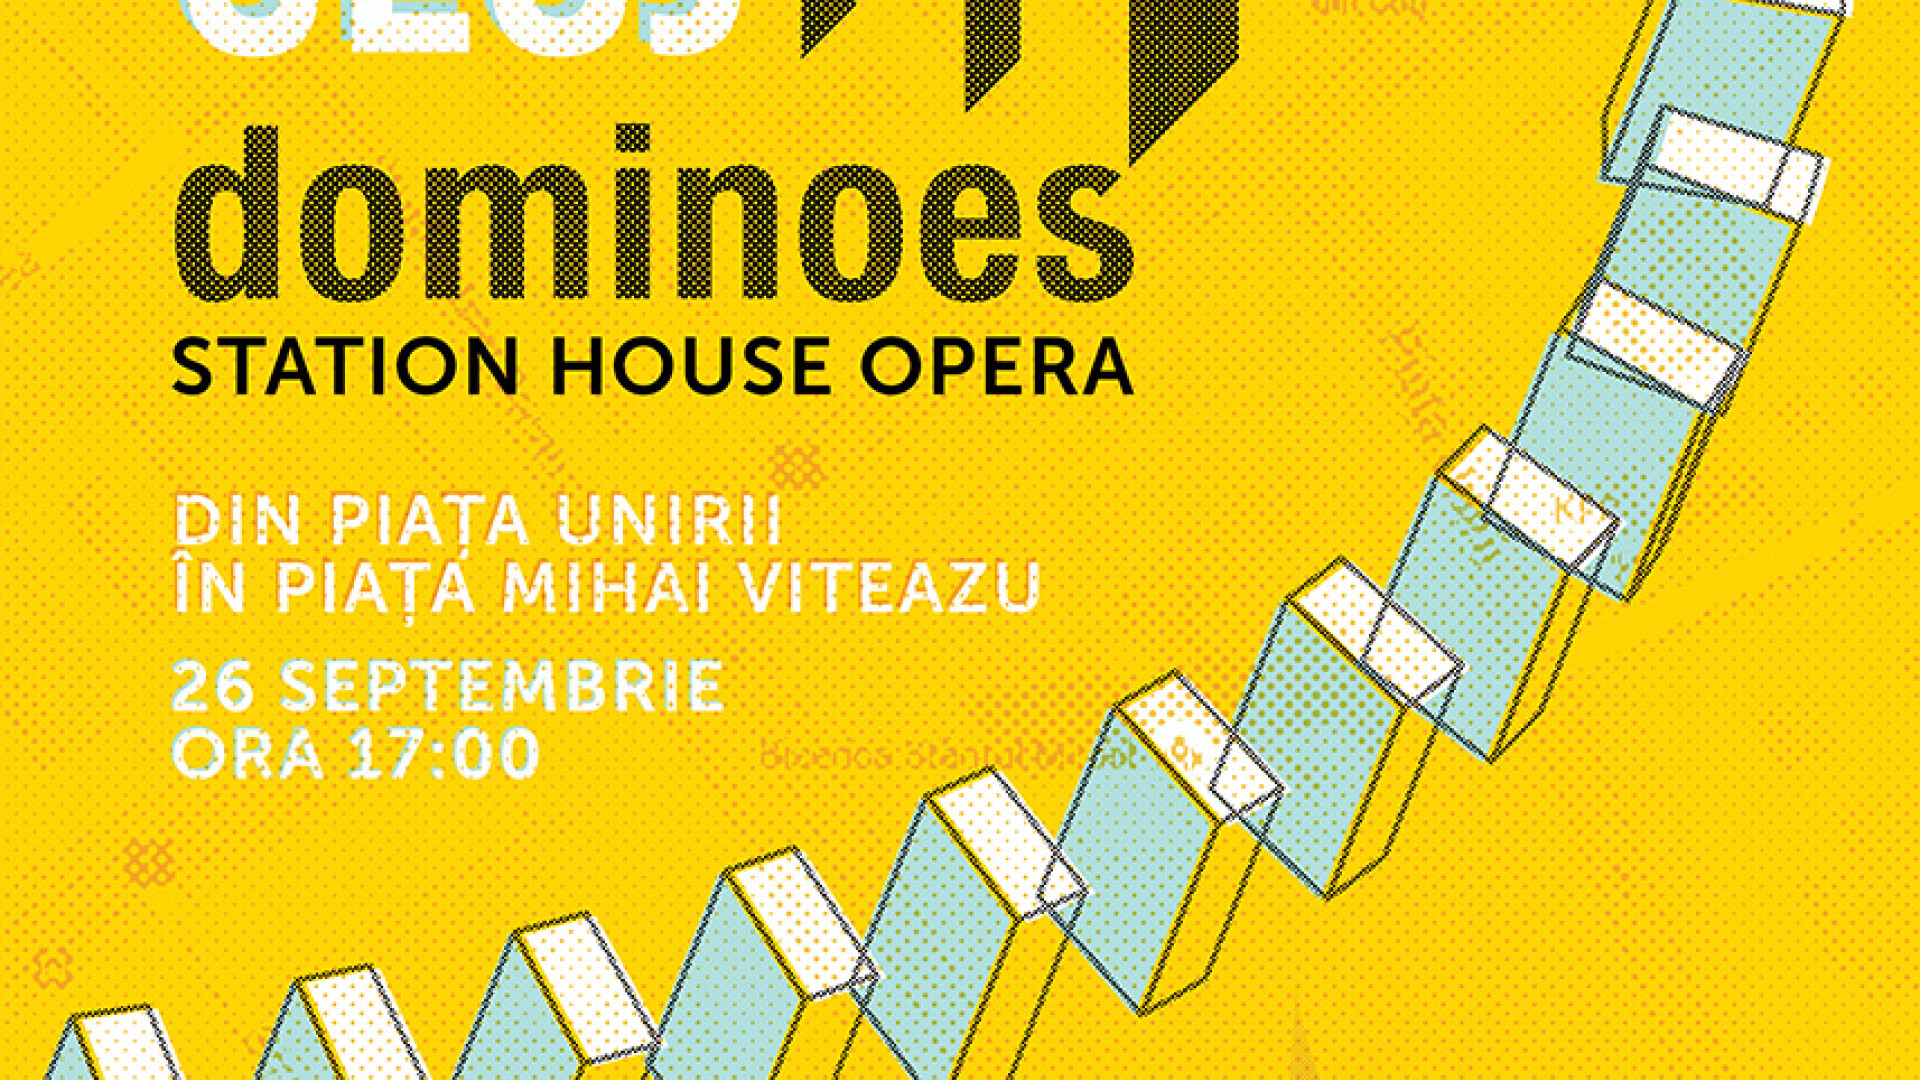 Cluj Dominoes. Peste 3.000 de piese de domino vor uni in weekend Piata Unirii de Piata Mihai Viteazu